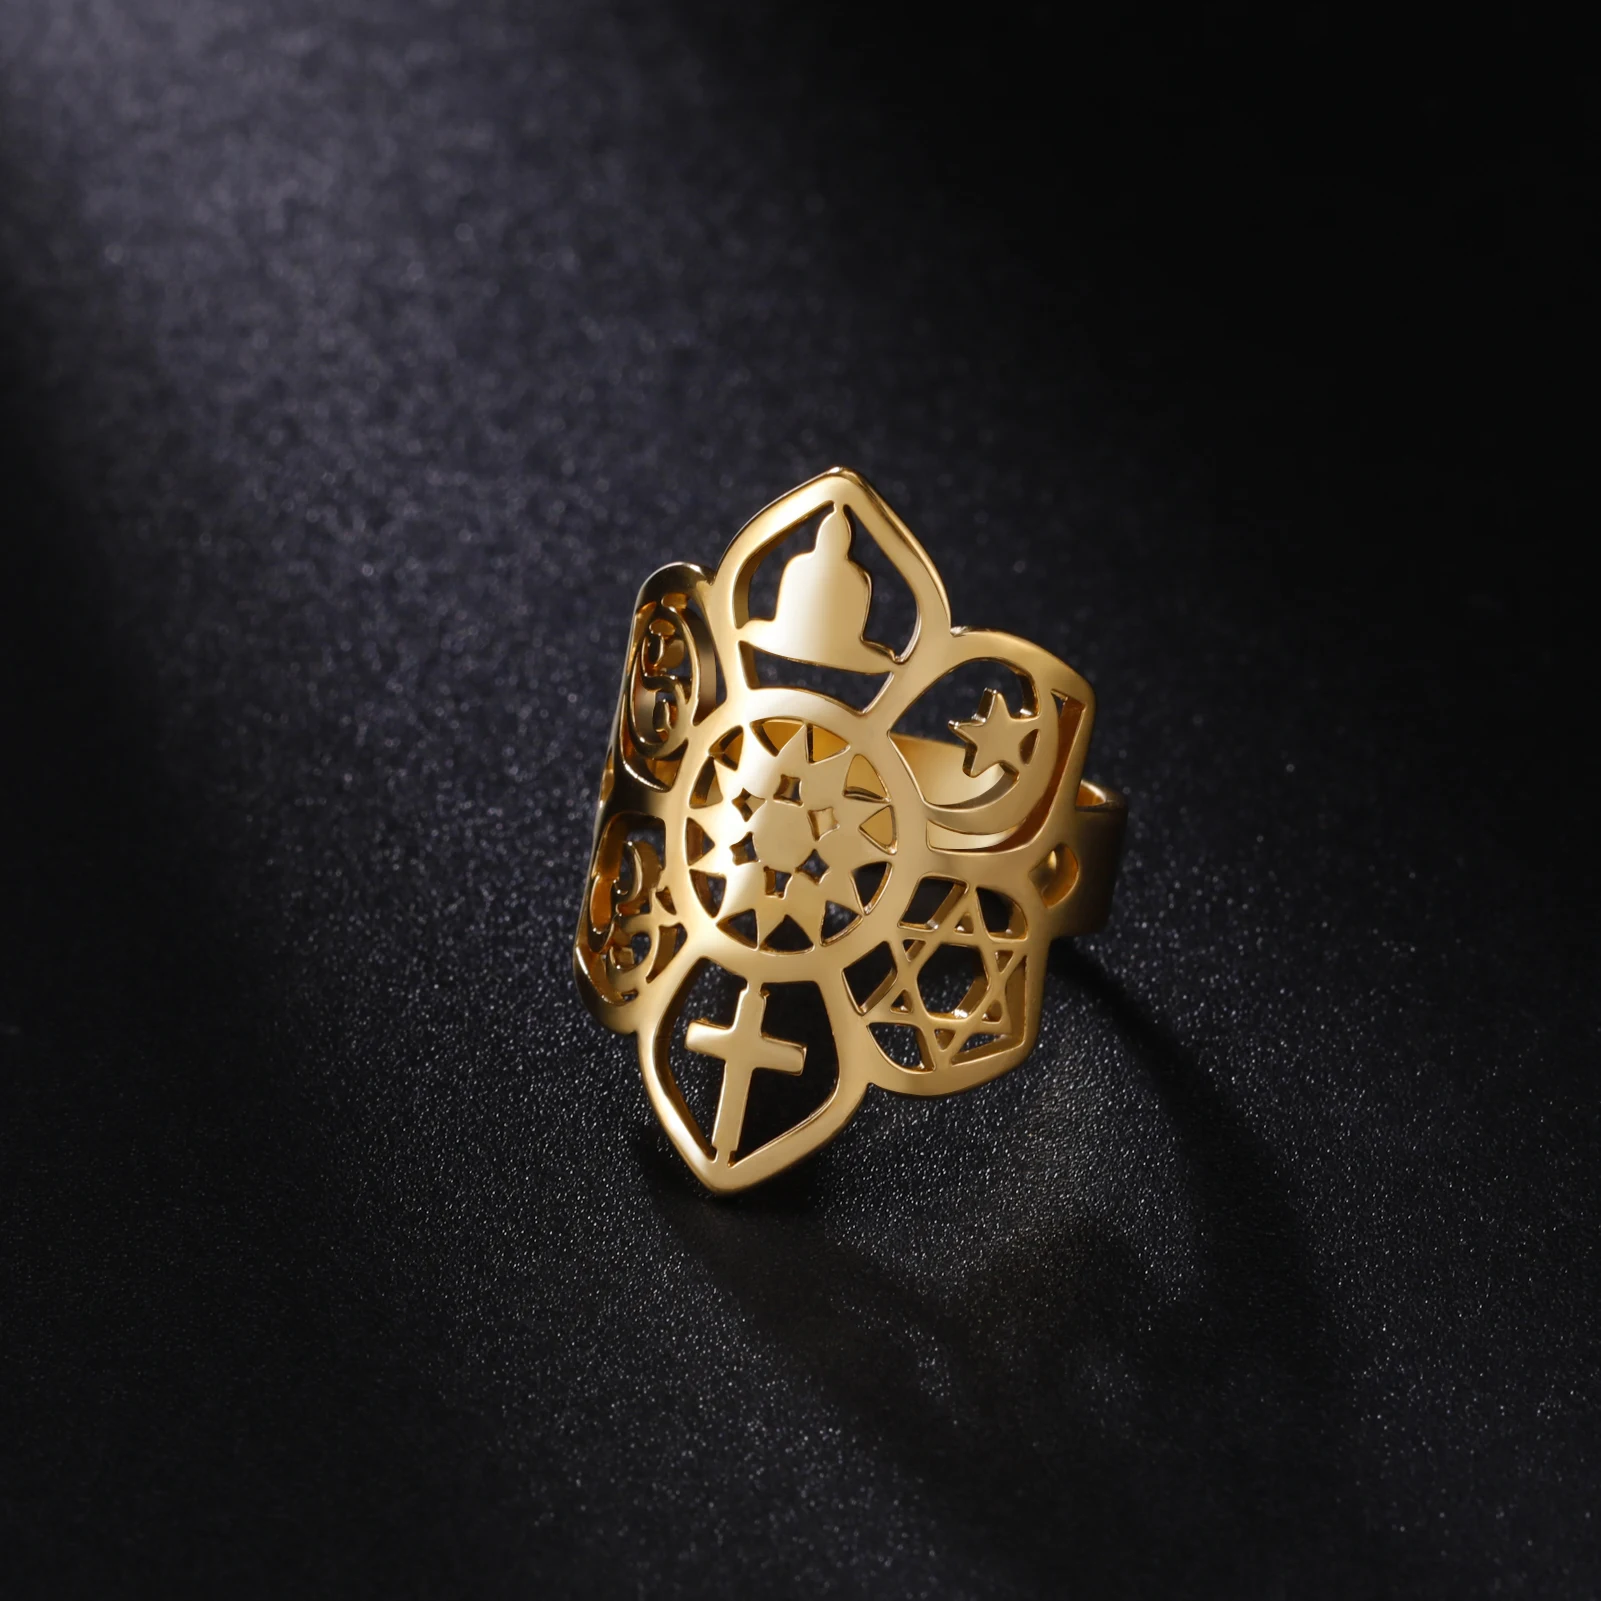 Skyrim-anillo de acero inoxidable con forma de flor de loto, joyería espiritual con forma de estrella, estrella de la Luna y estrella de dawd YinYang, 6 filosofías